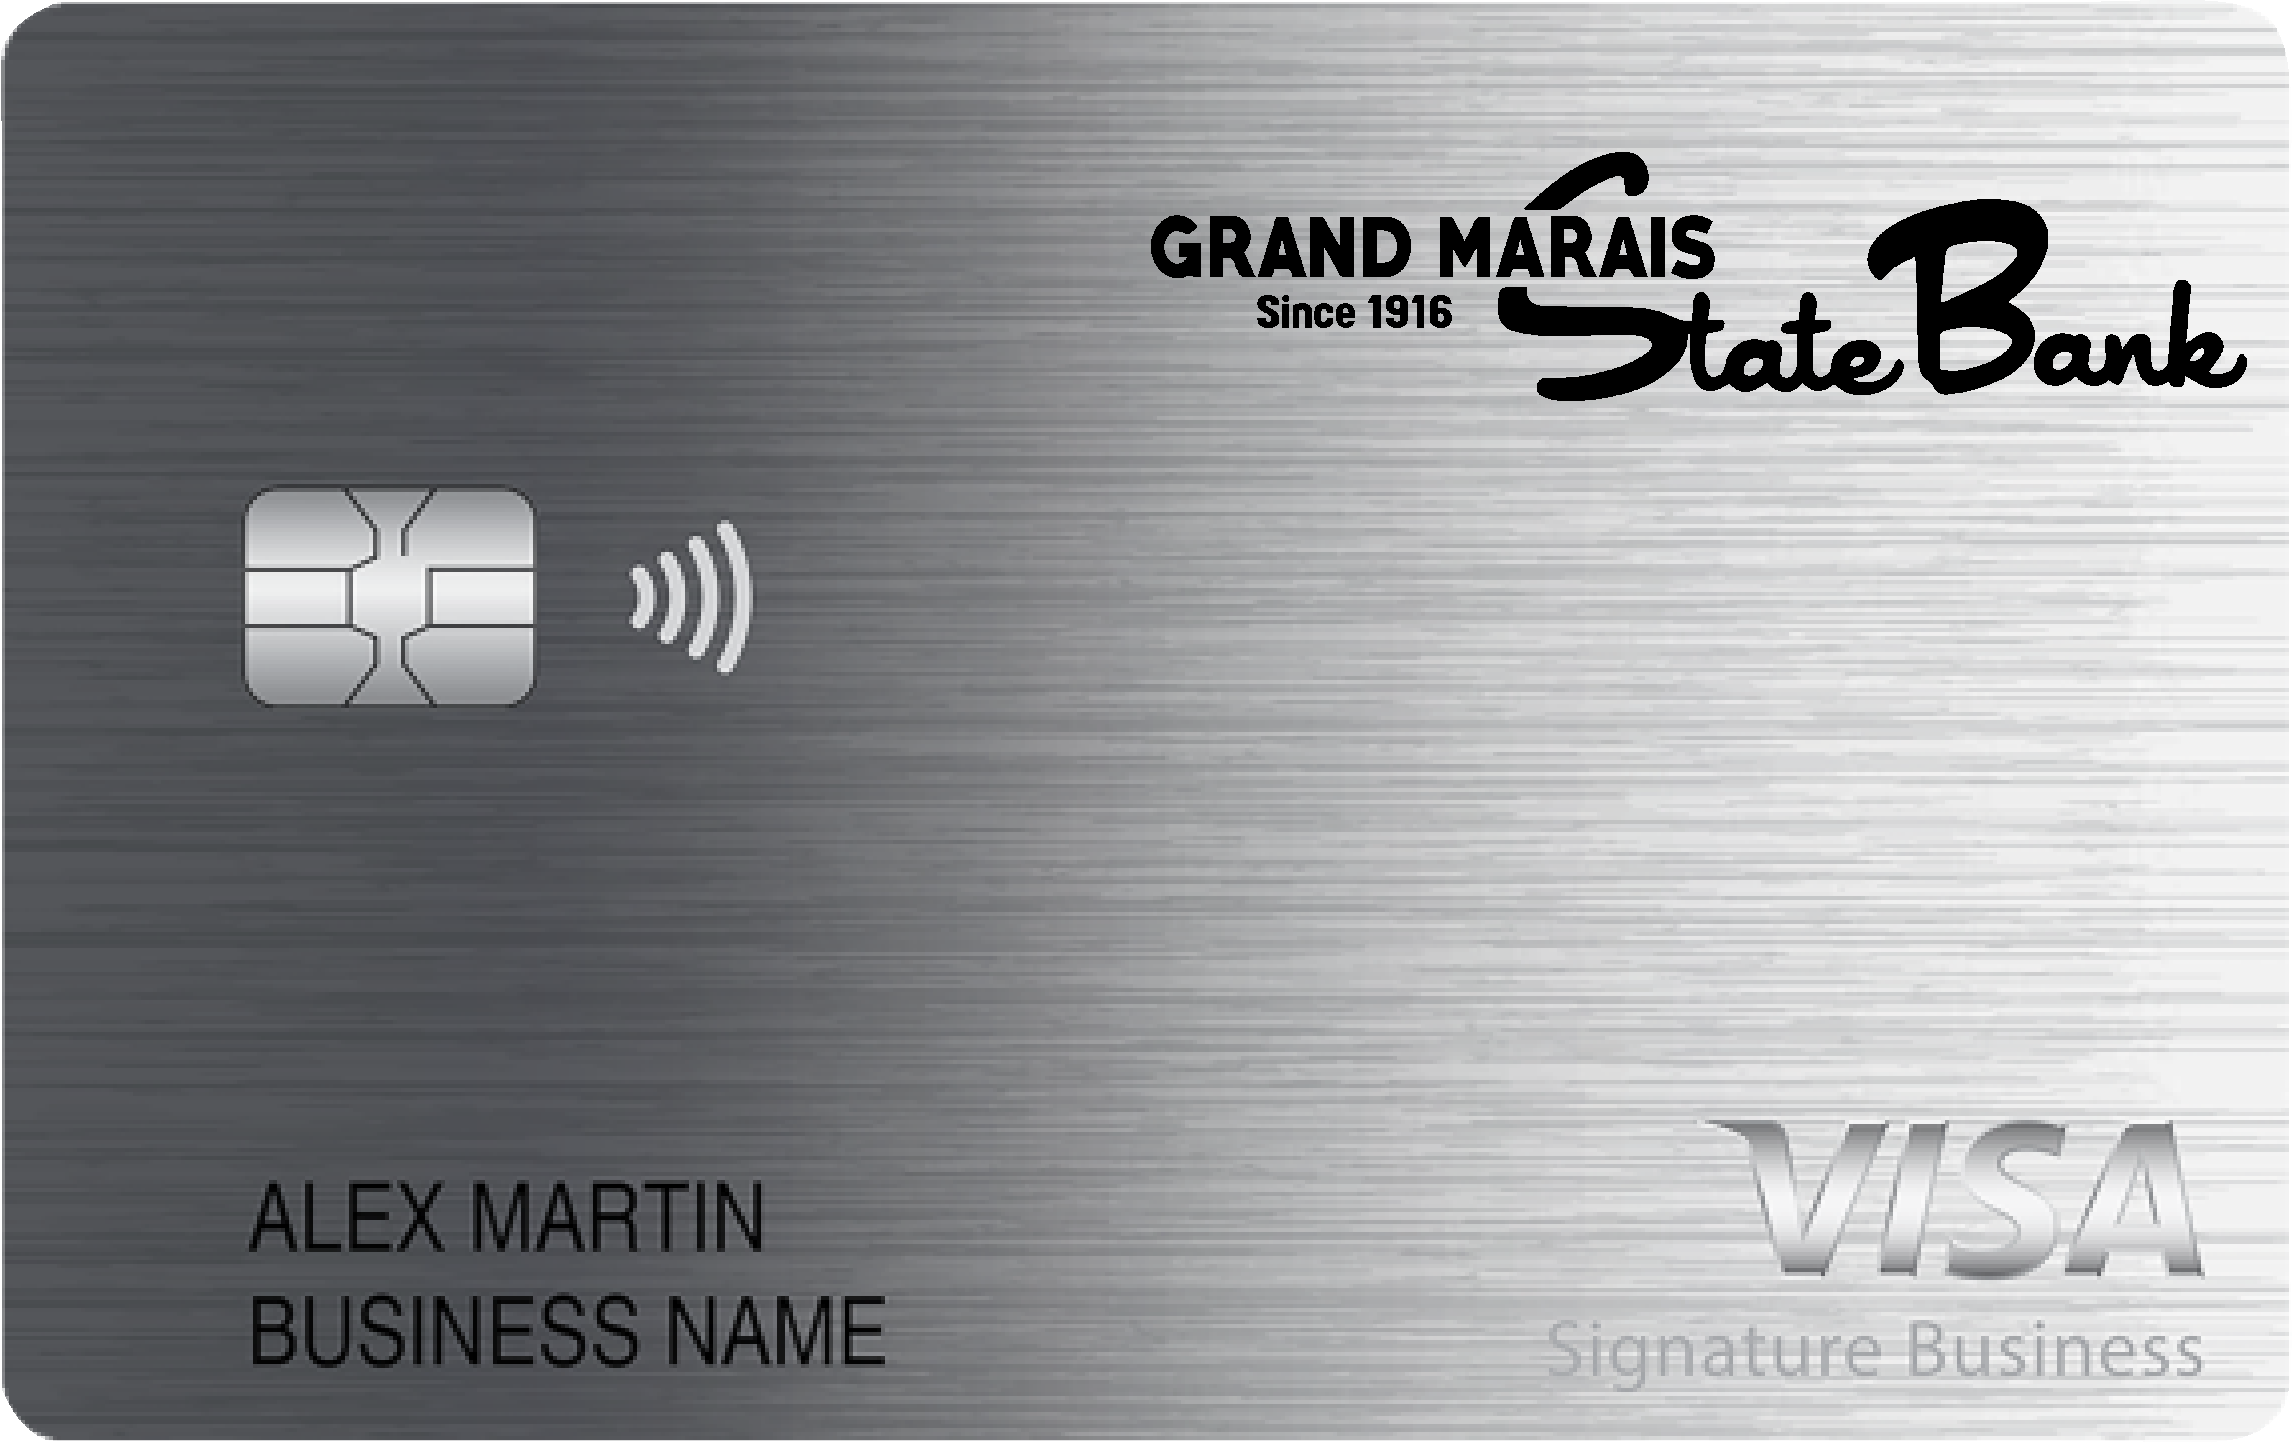 Grand Marais State Bank Smart Business Rewards Card